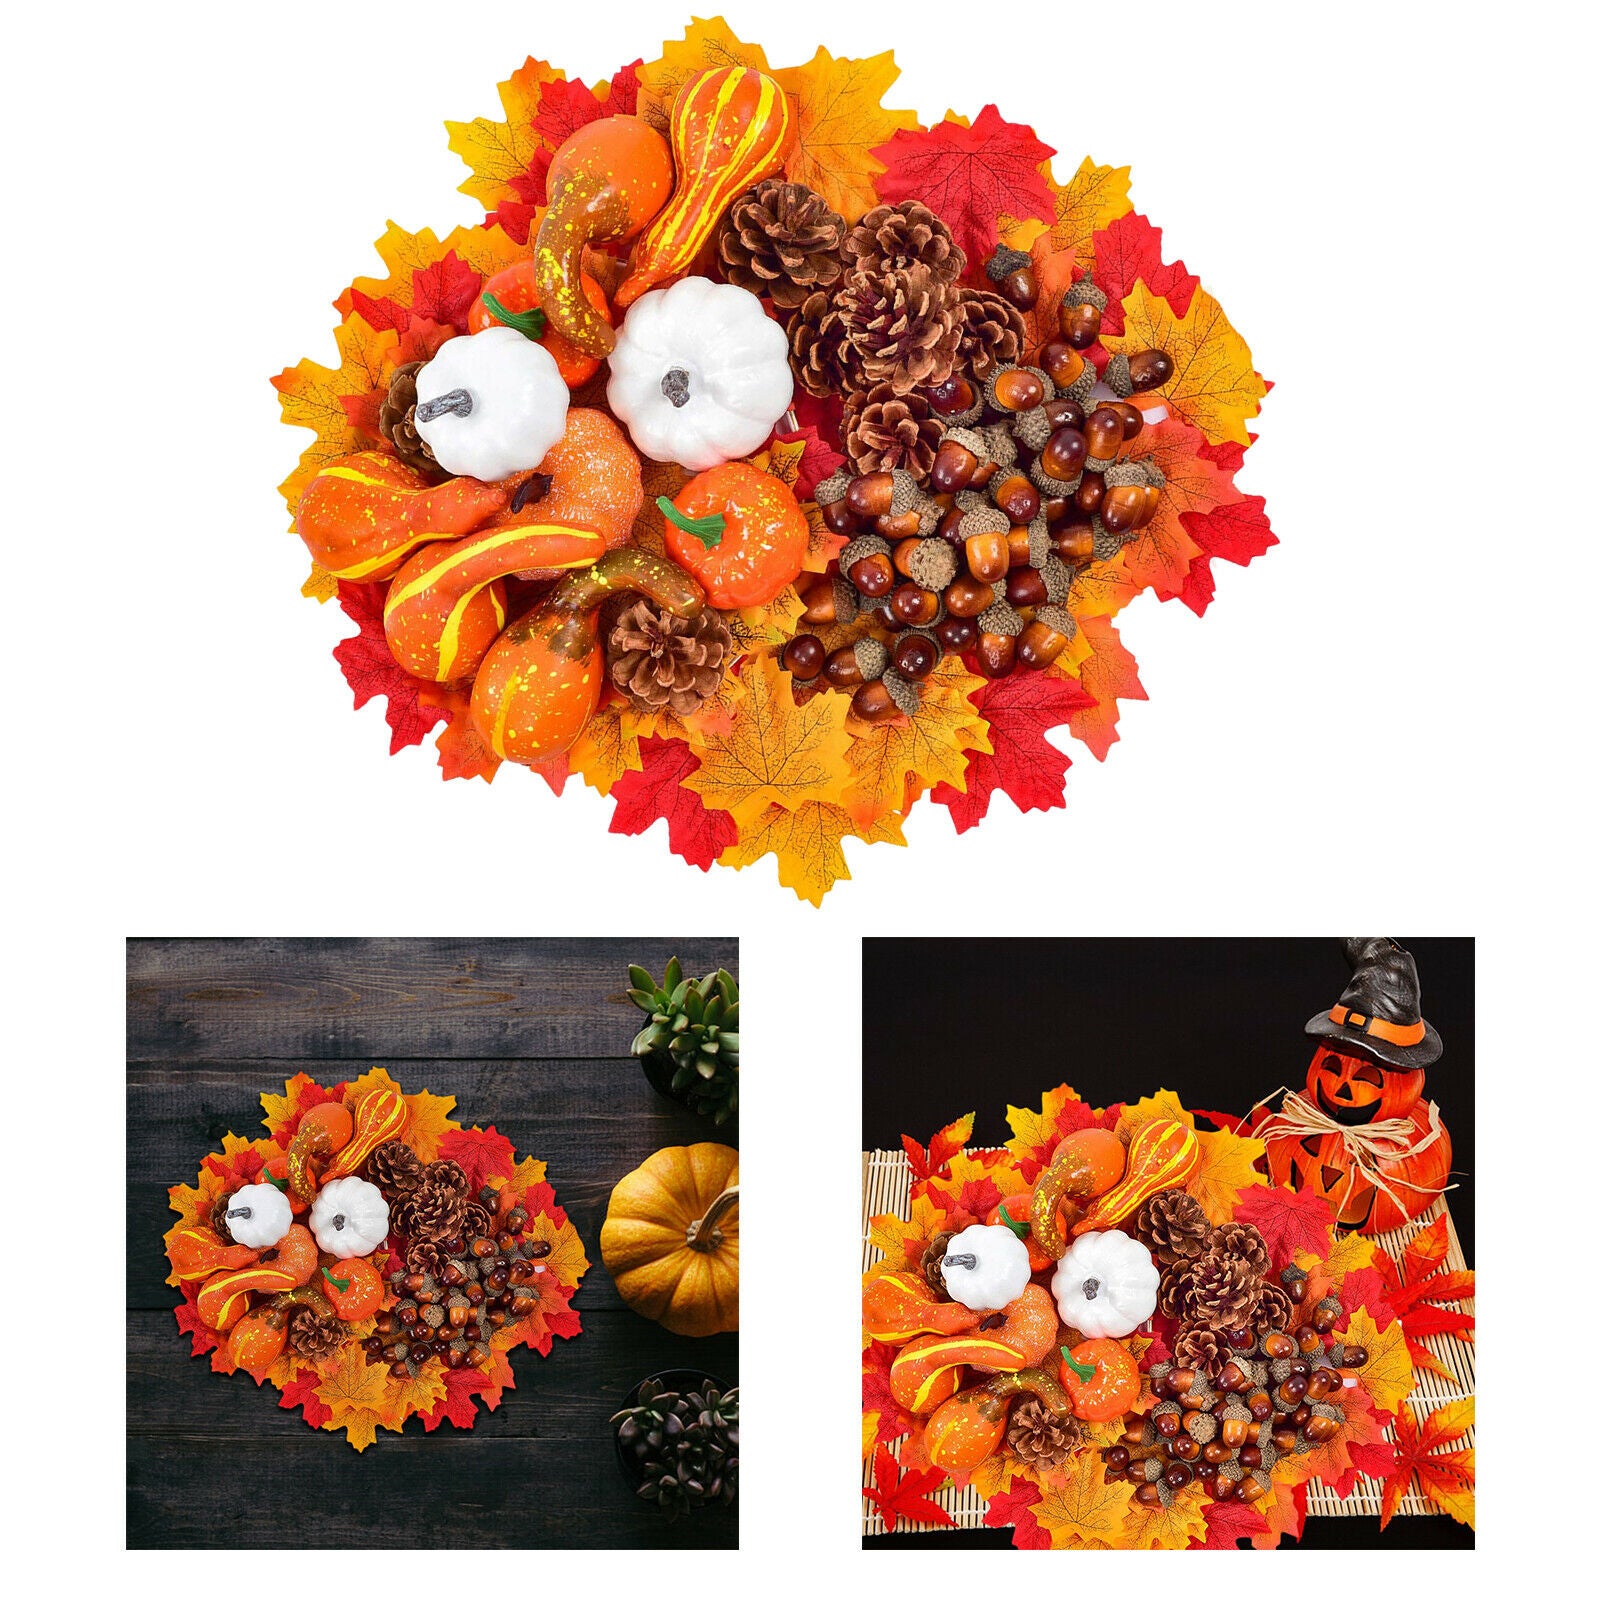 218 in 1 Artificial Pumpkins Maple Leaf Props Halloween Decoration Handwork